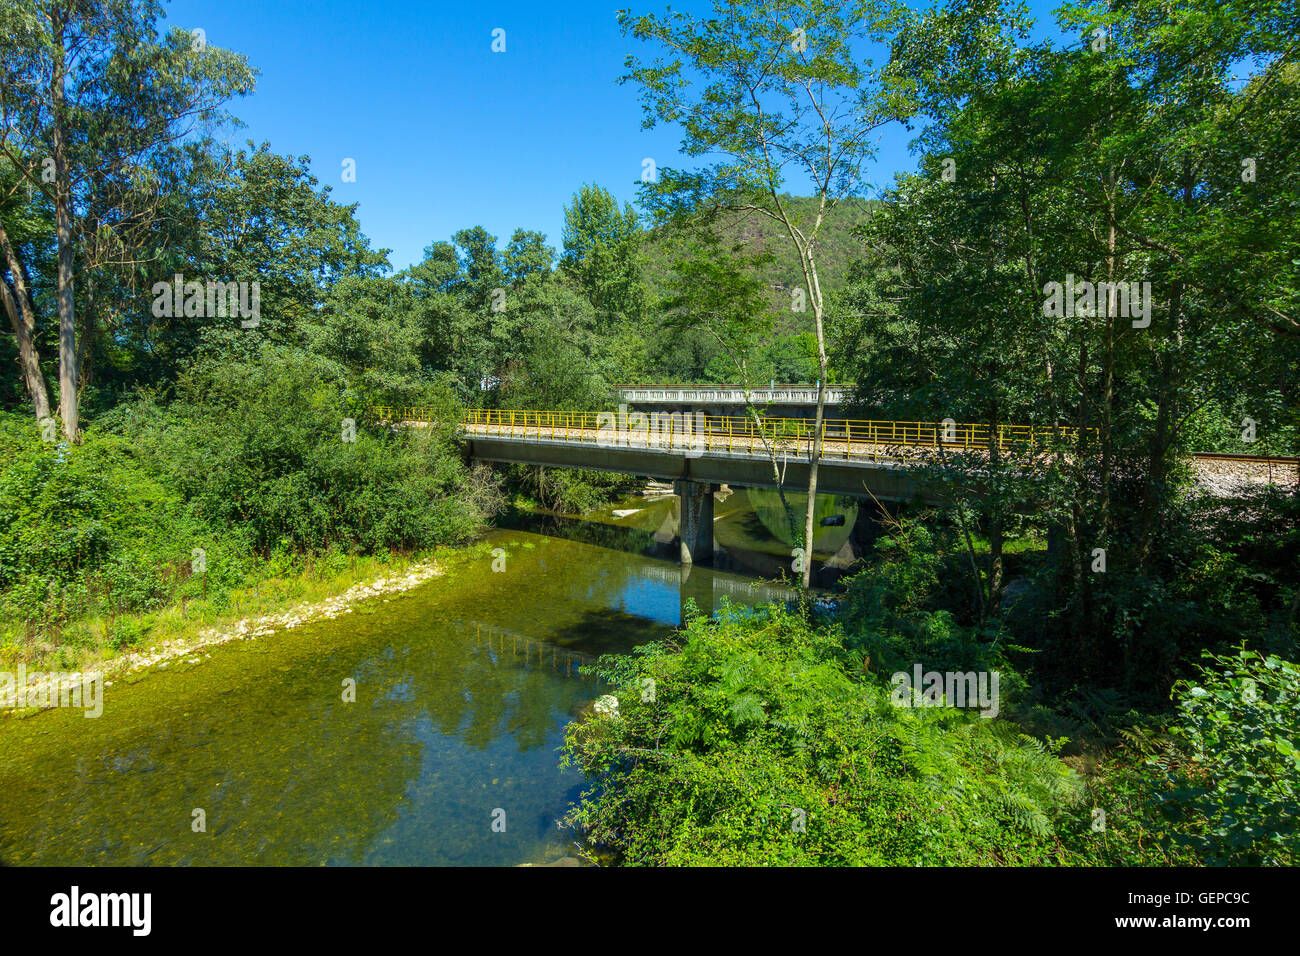 Small railway bridge over a river Stock Photo